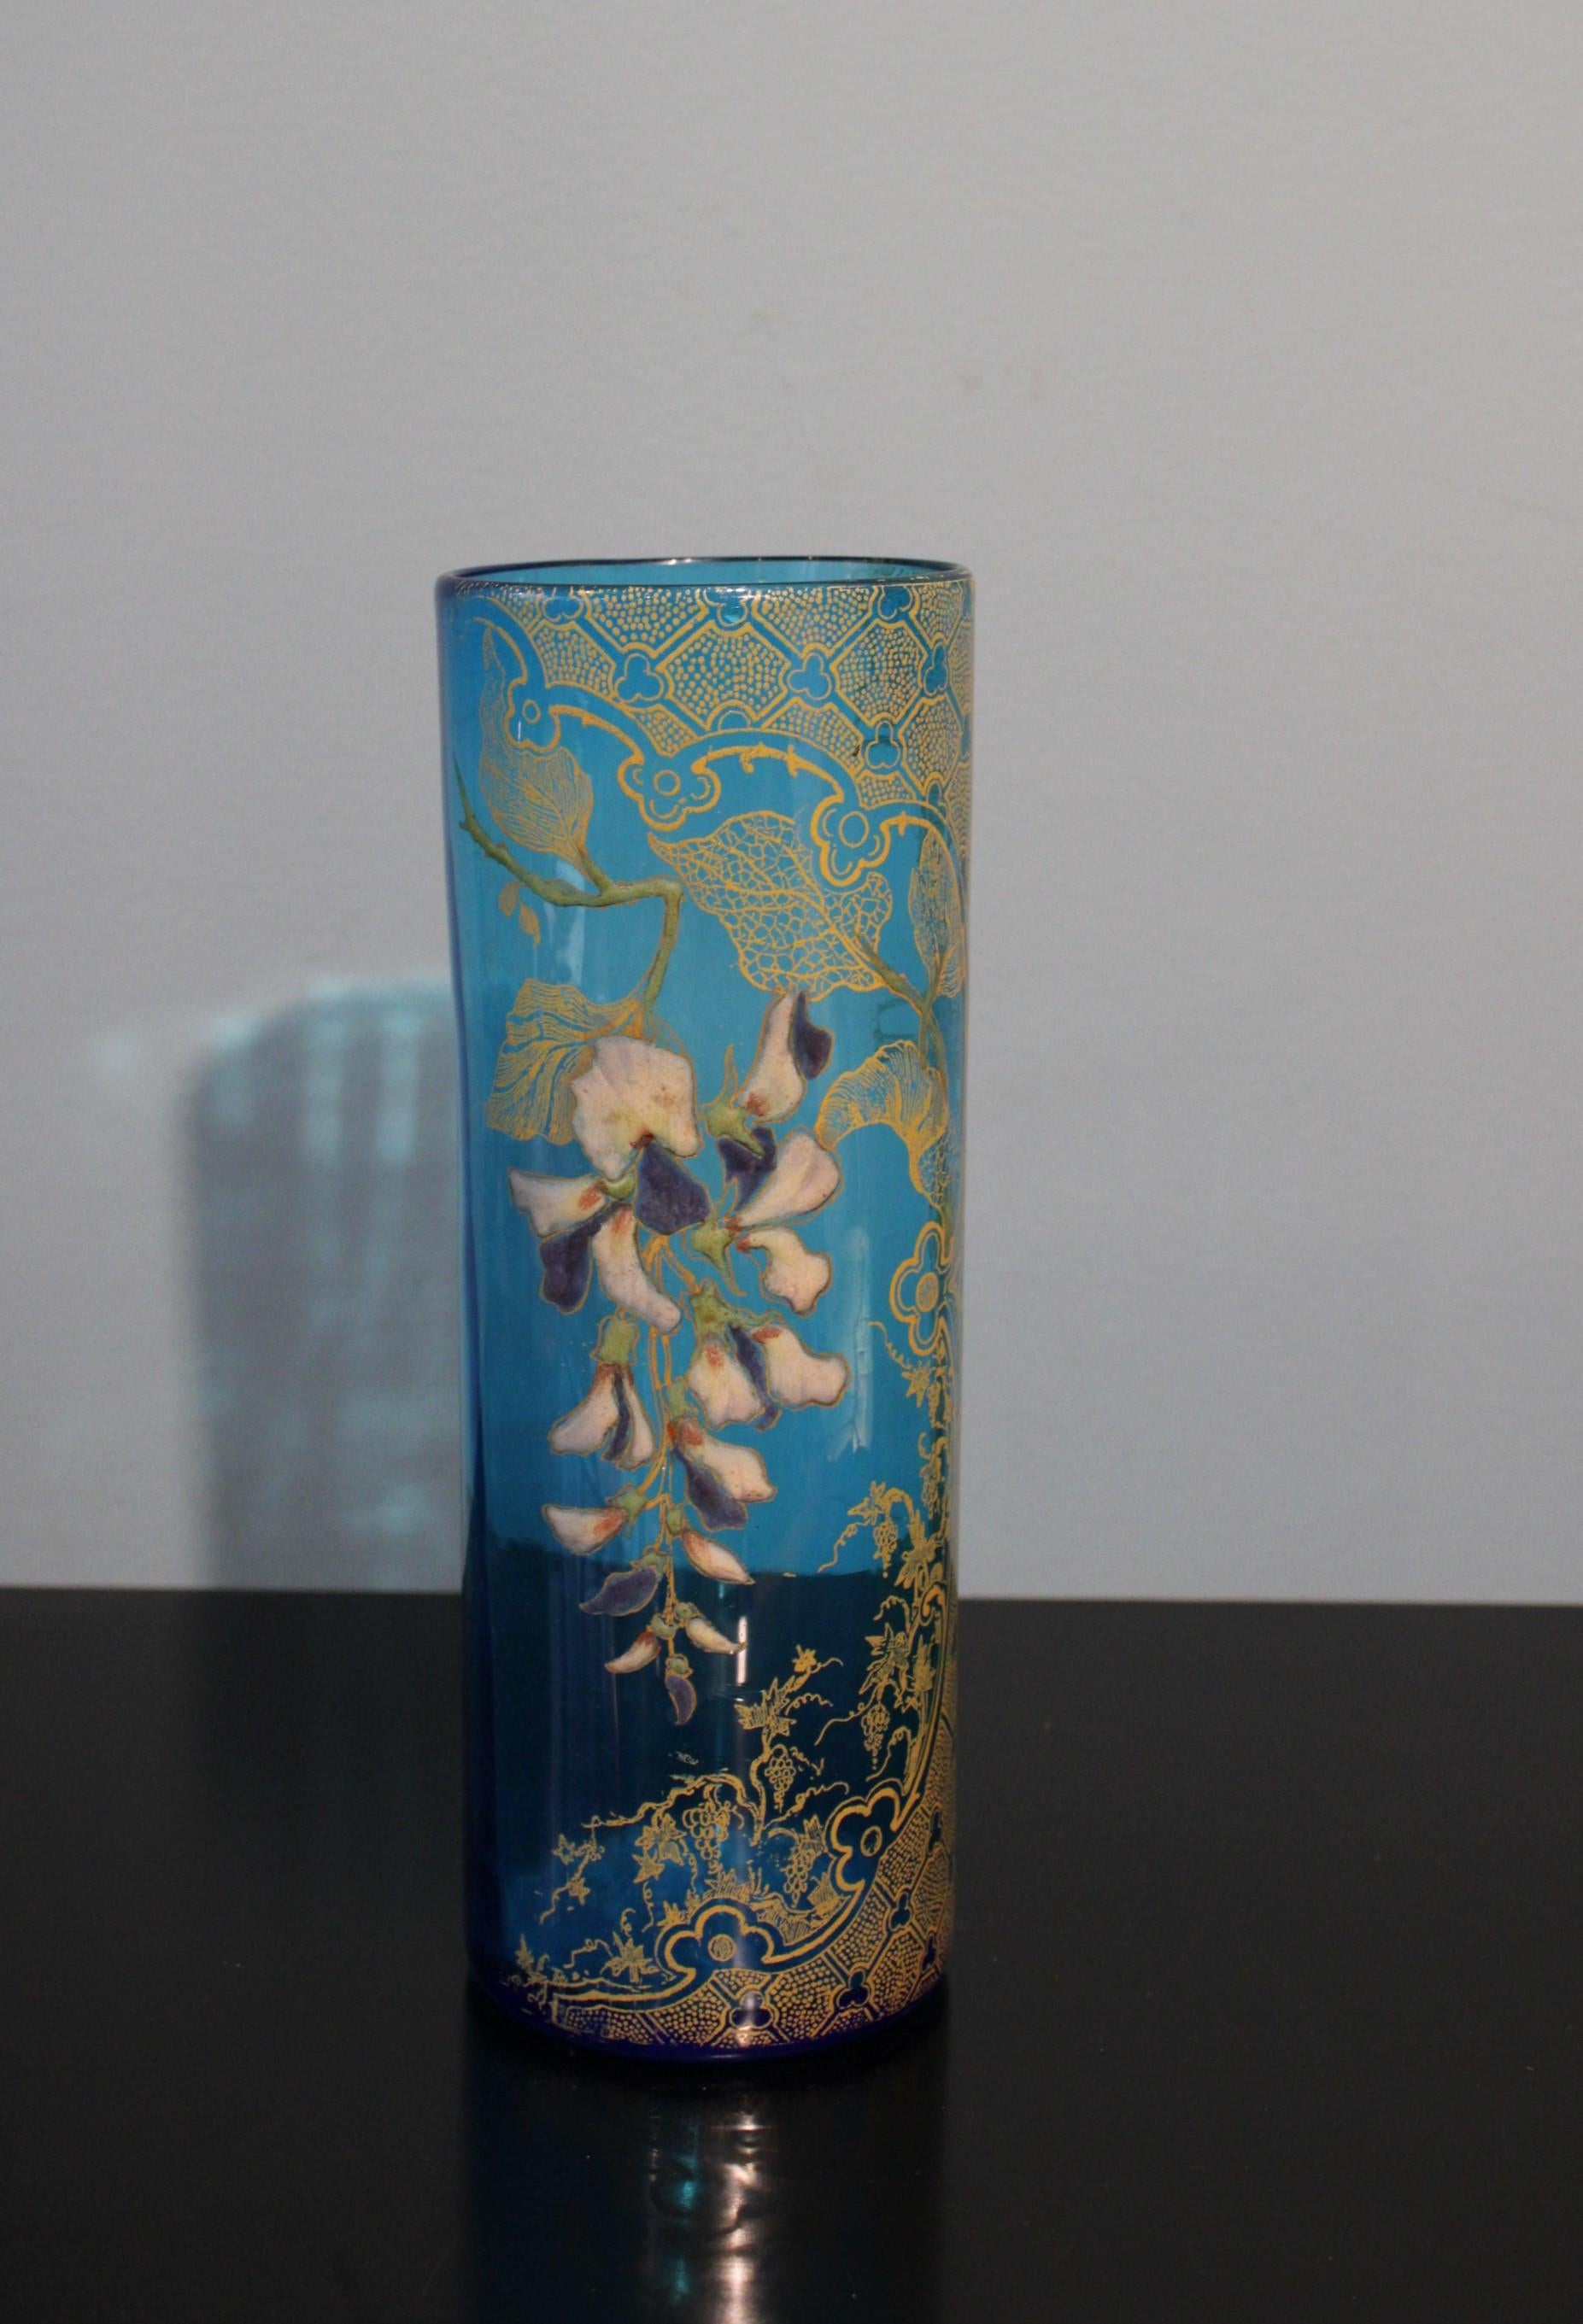 Blue glass vase, Art Nouveau style. 
Circa 1900.
Enamelled and gilded decor.